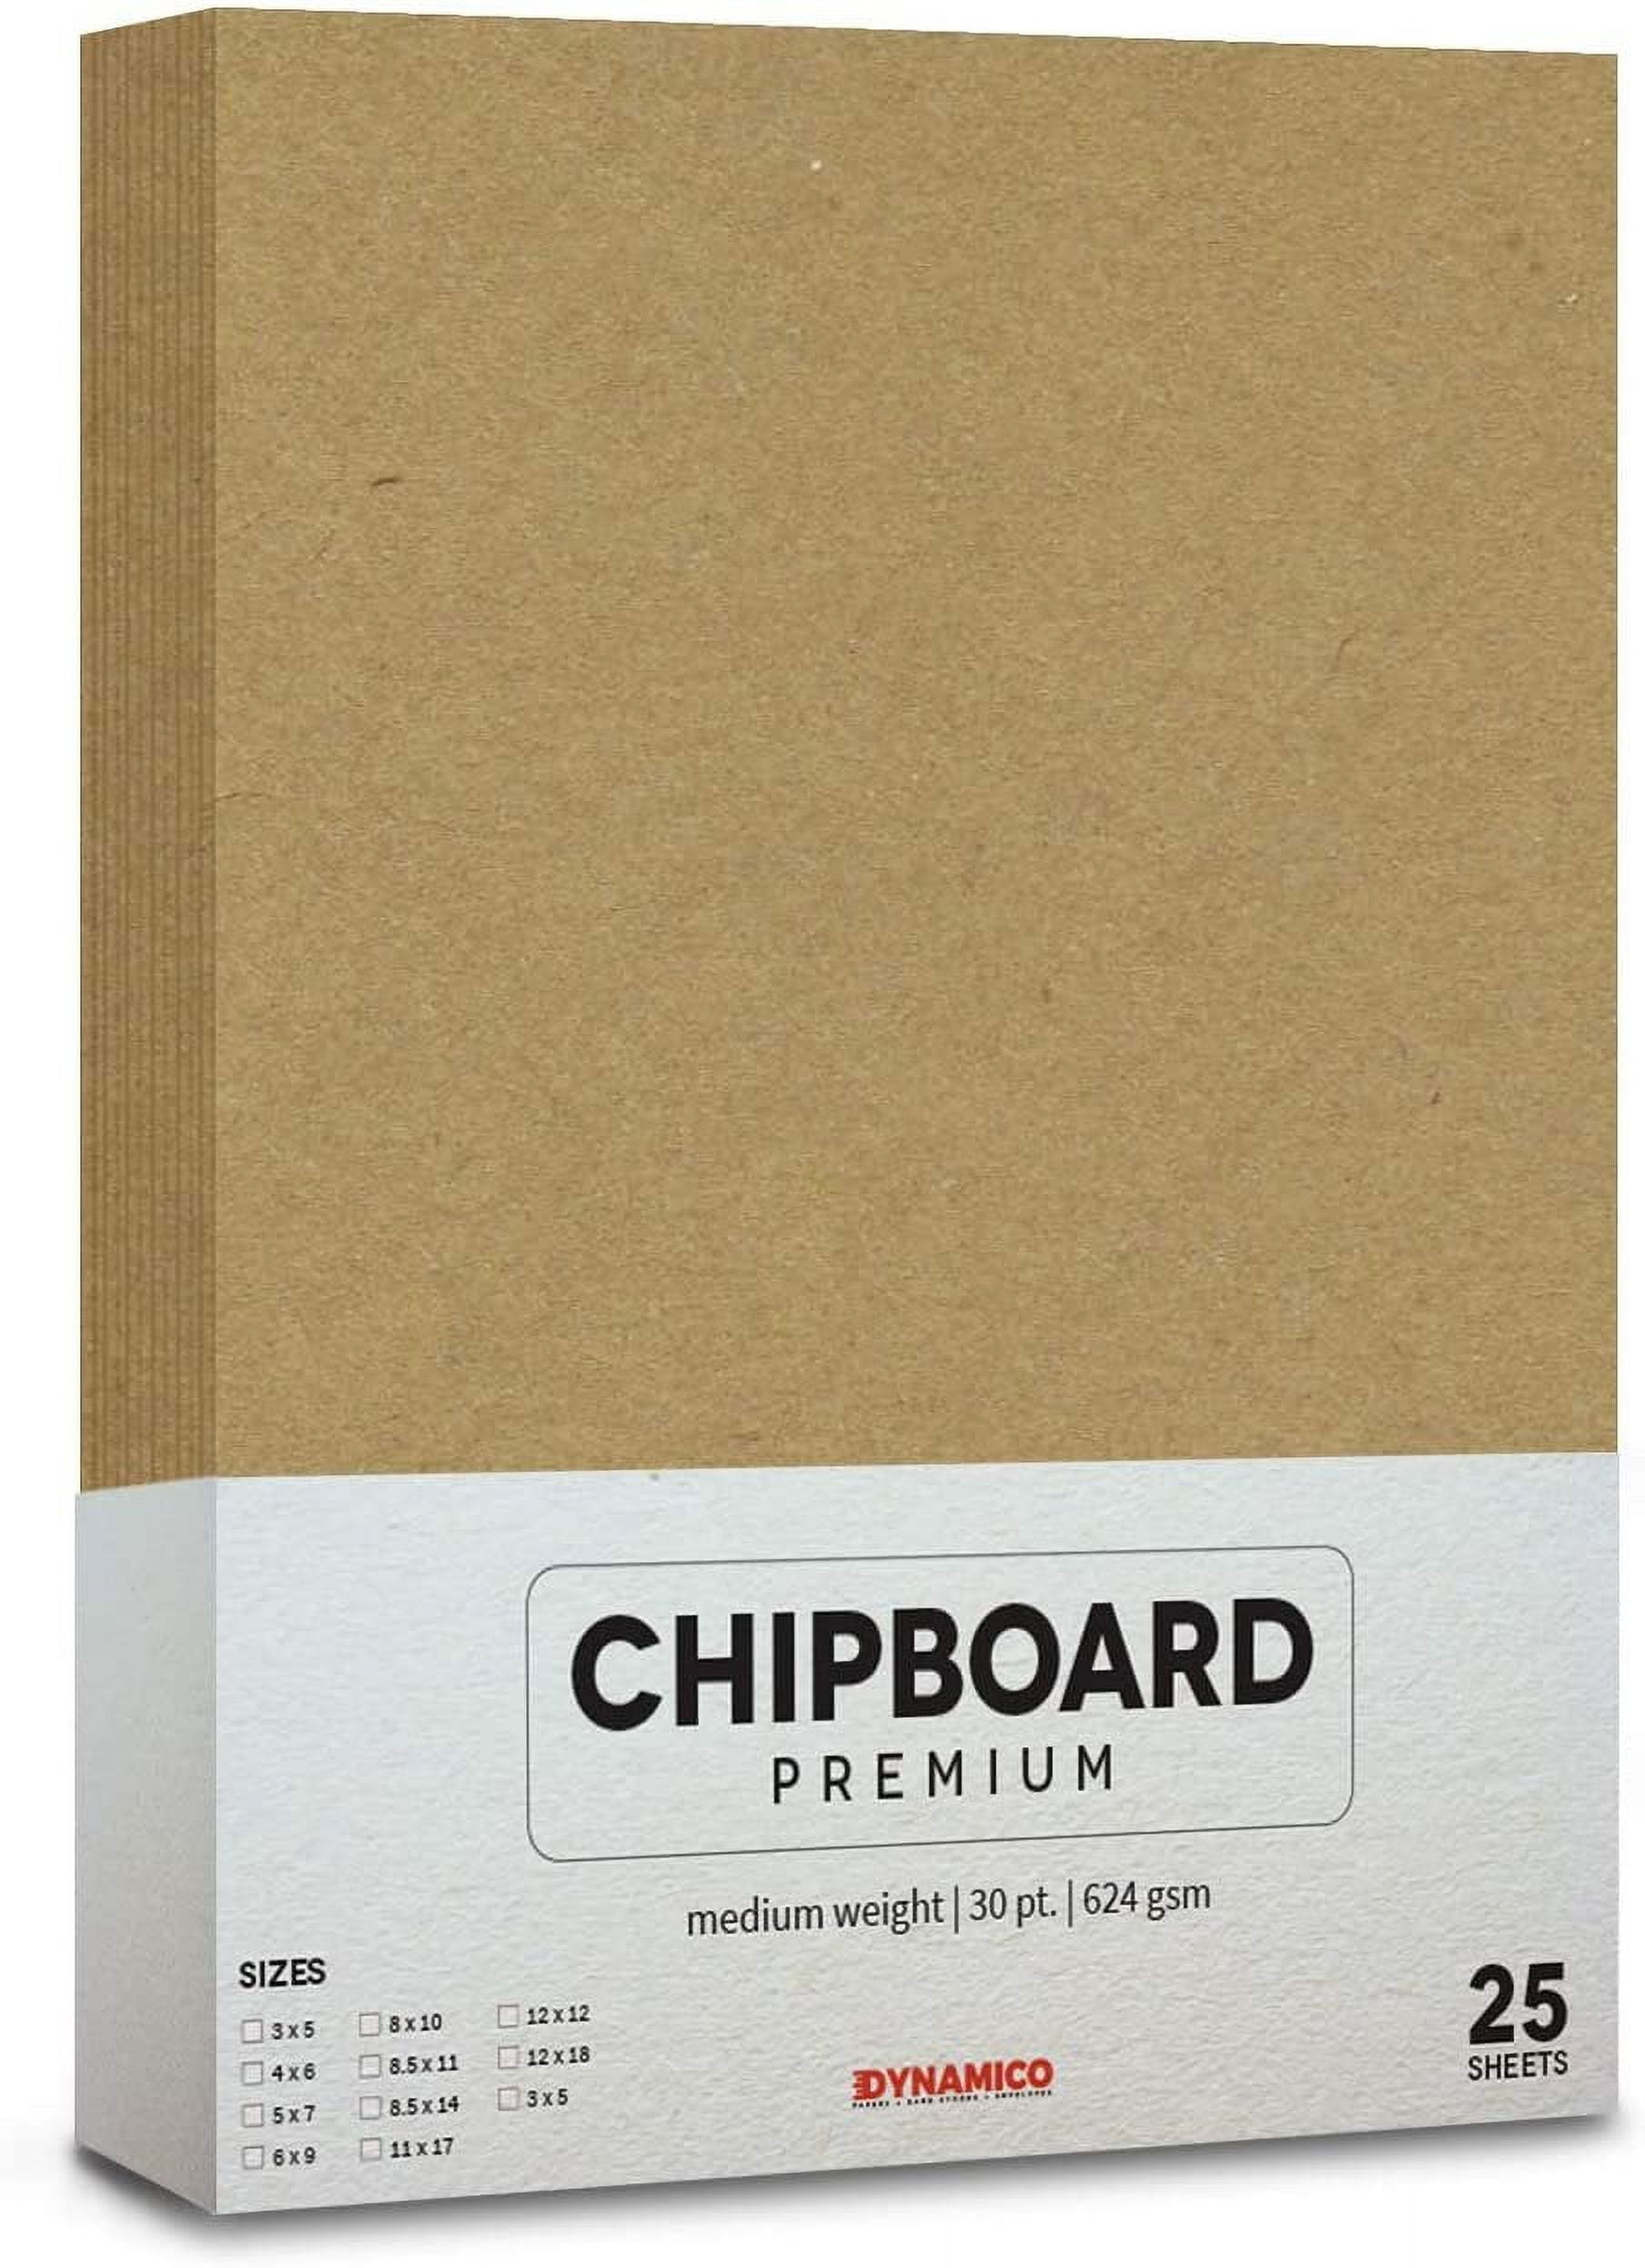 25 Sheets of Chipboard, 30pt (Point) Medium Weight Cardboard .030